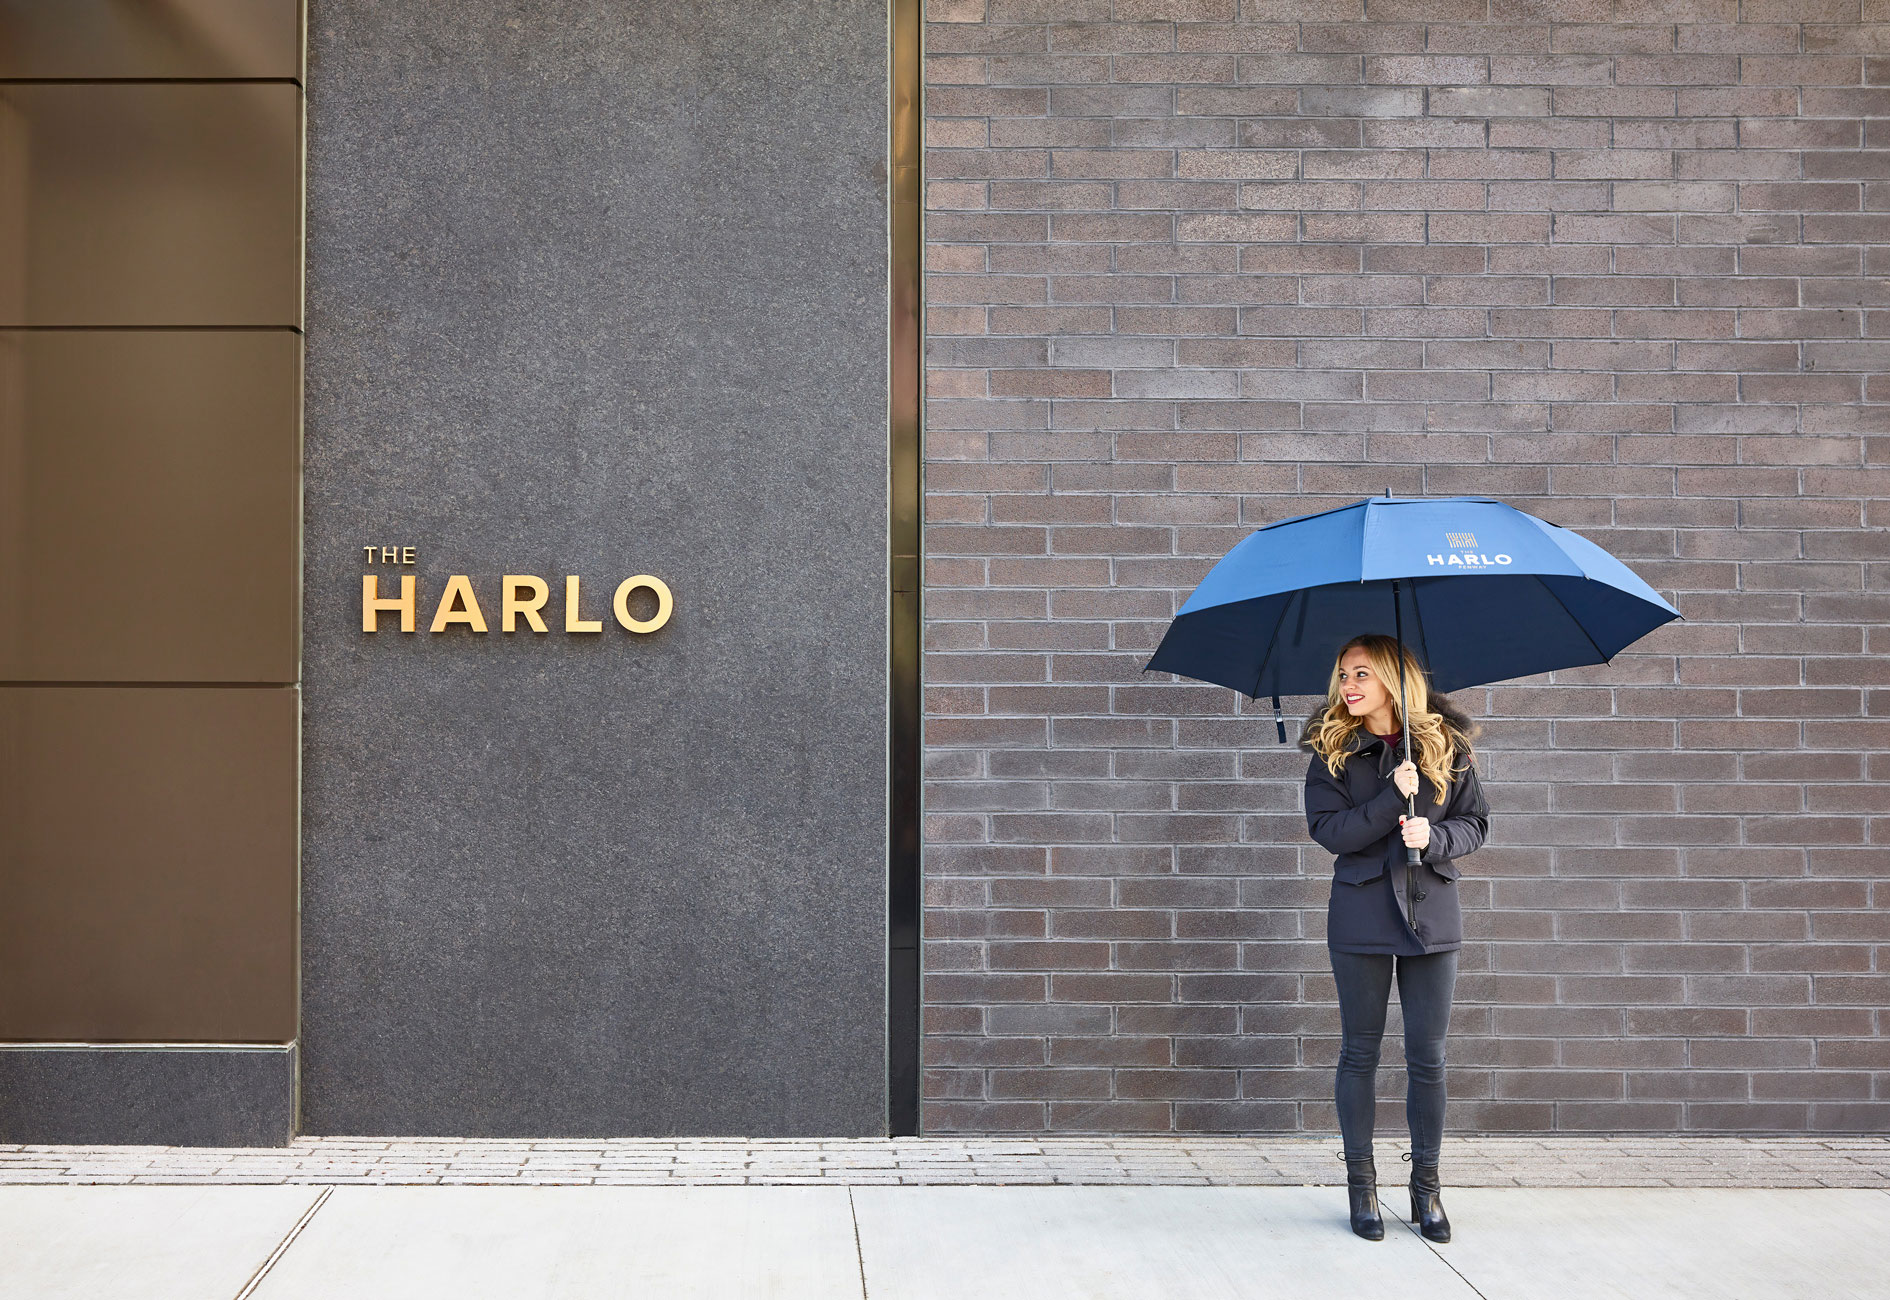 The HARLO by Mark Zeff Design